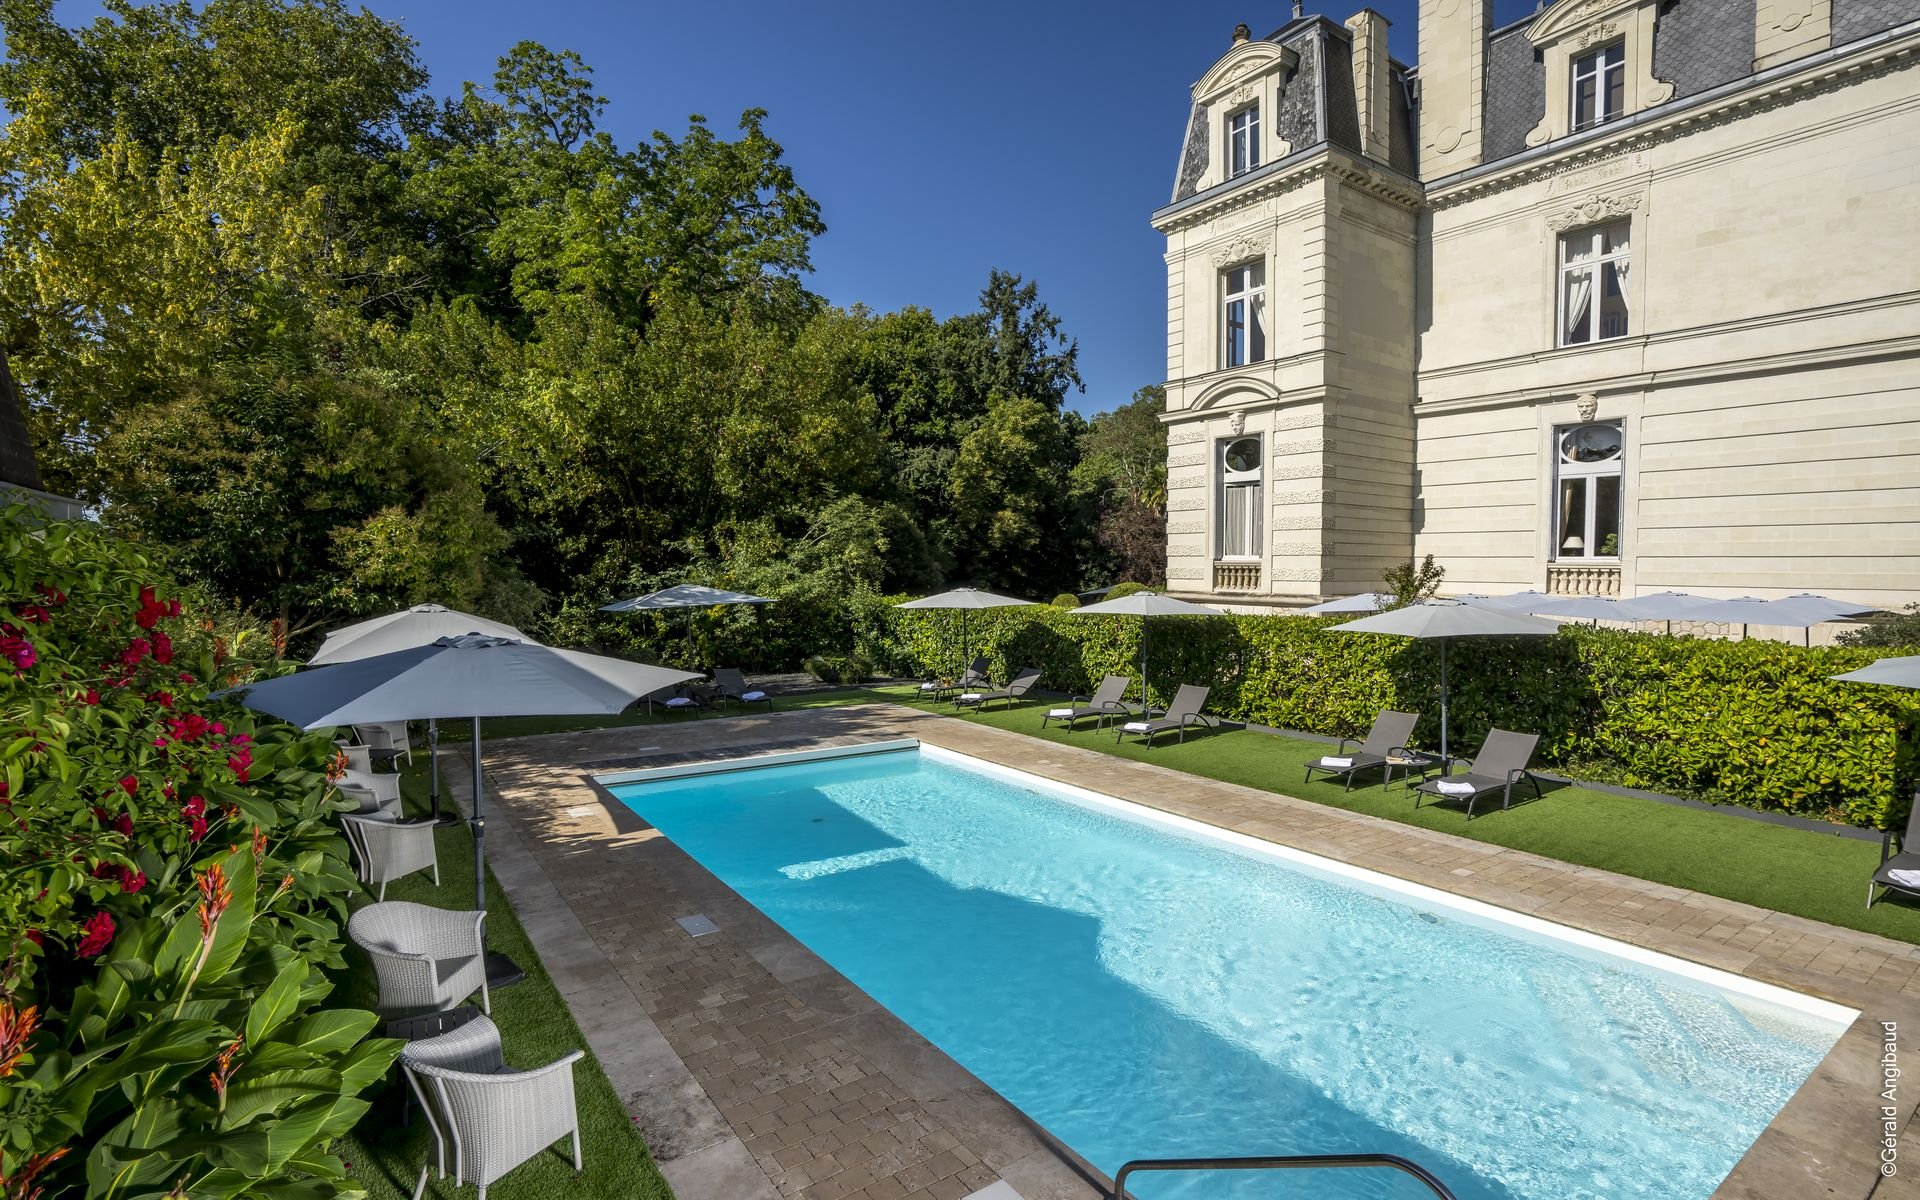 127/piscine  spa/I1055-_Chateau_de_Verrieres_pisc_021-_resultat-2.jpg